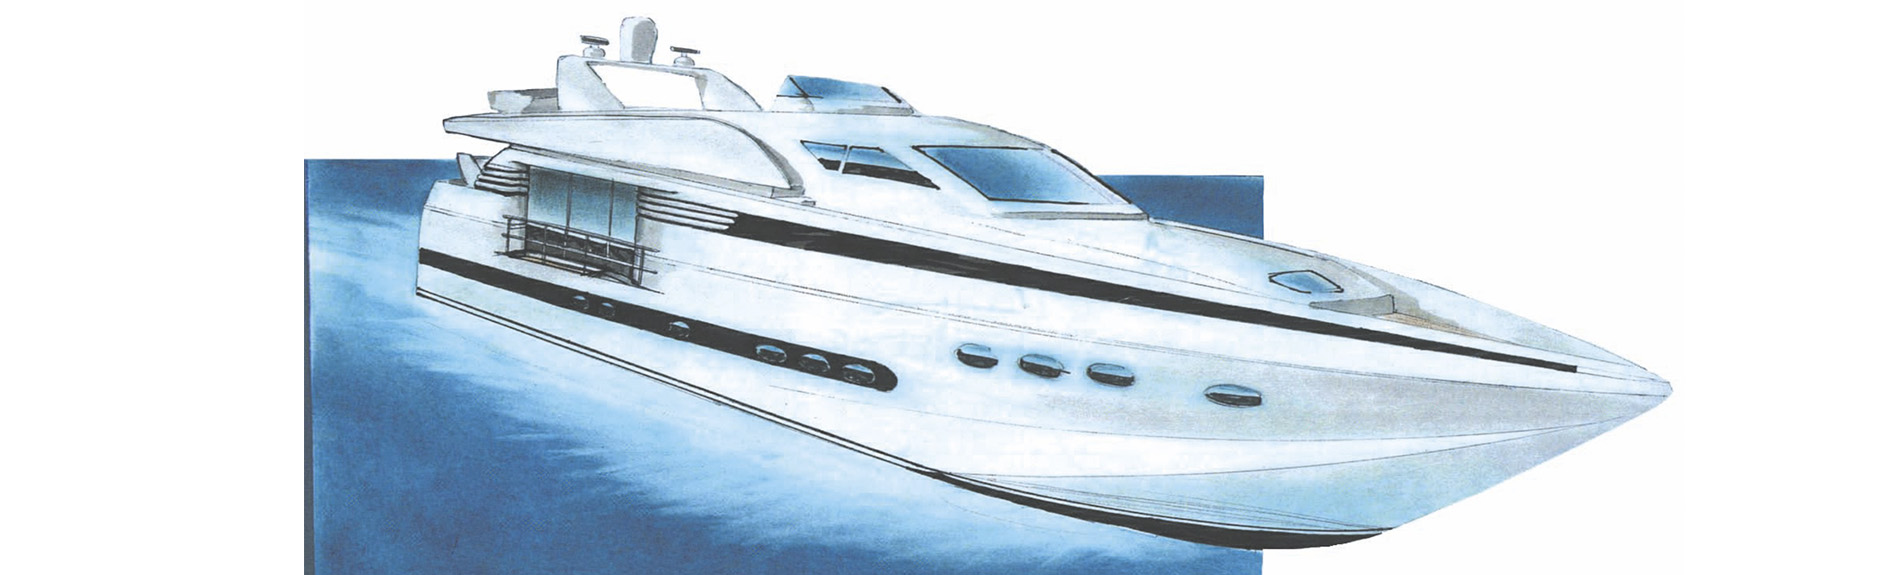 yacht design